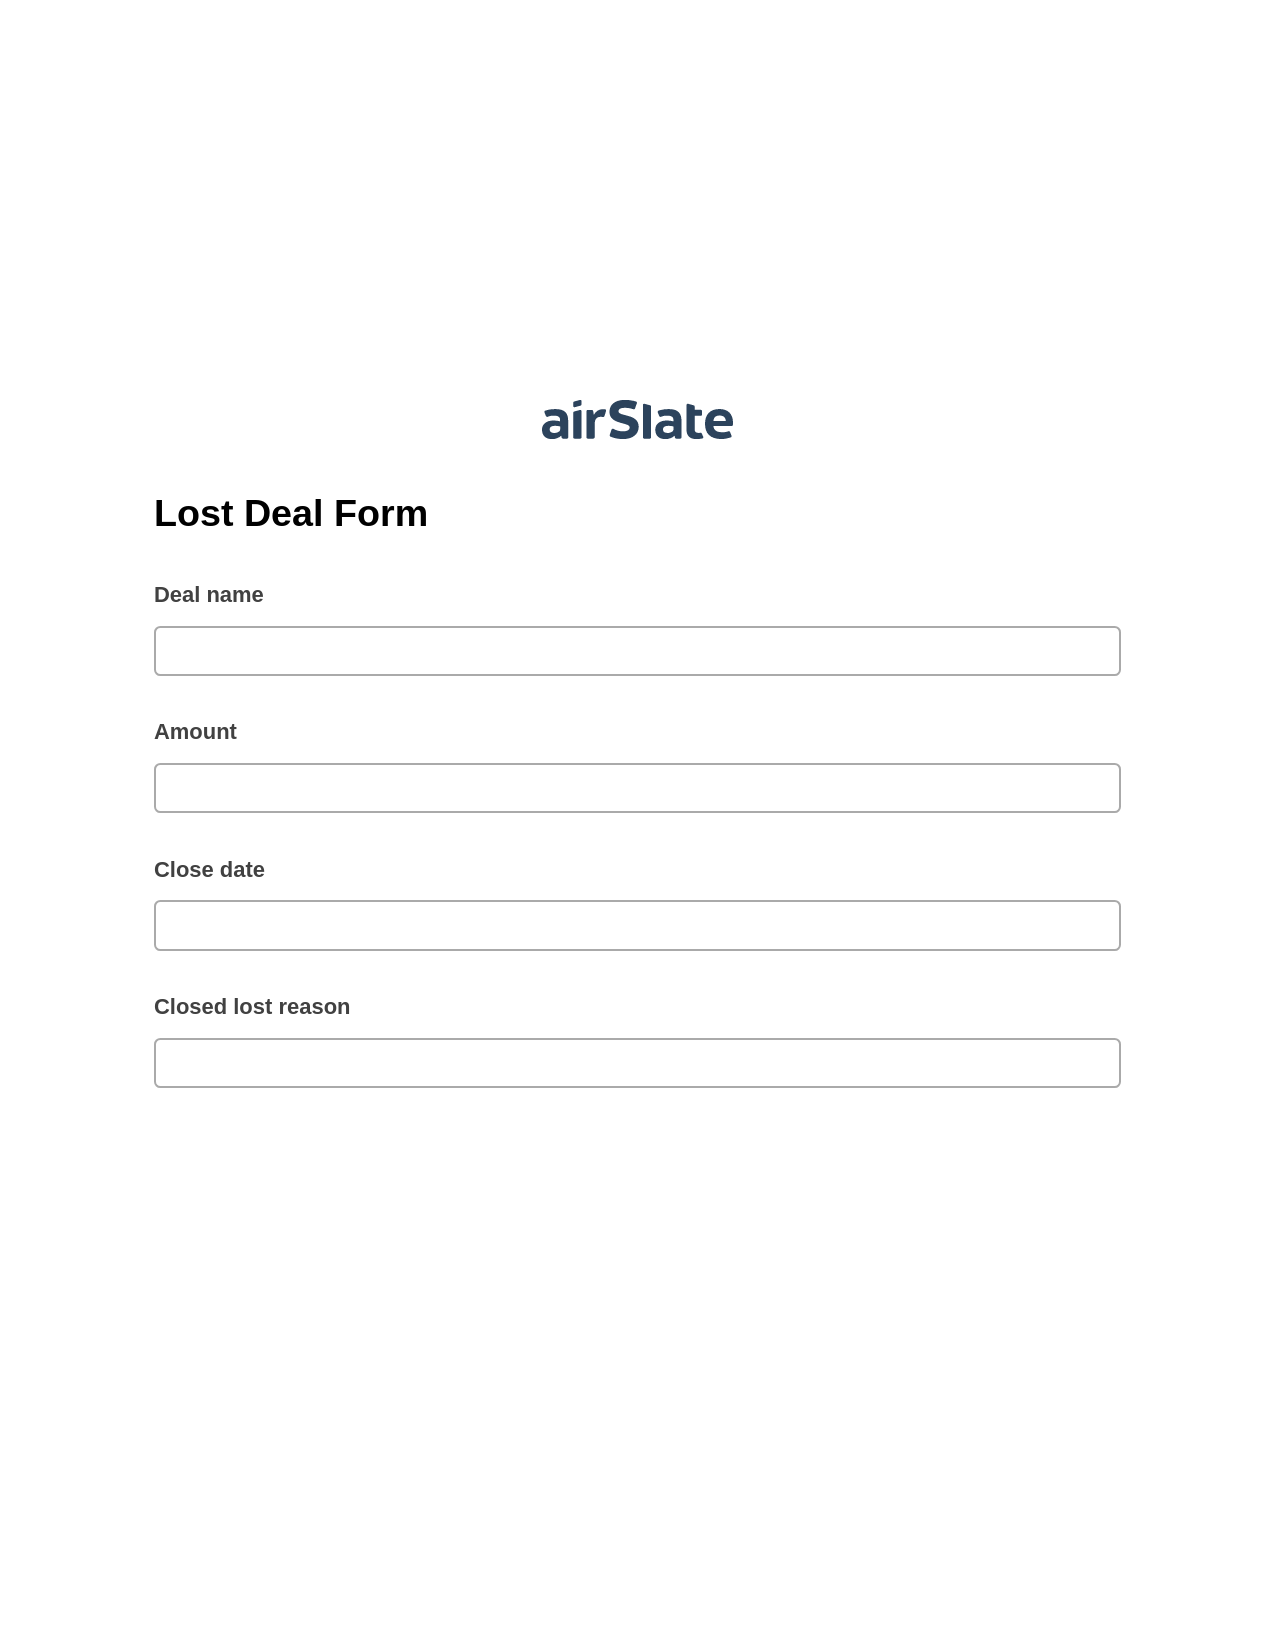 Lost Deal Form Pre-fill from MS Dynamics 365 Records, Custom Field's Value Bot, Slack Notification Postfinish Bot